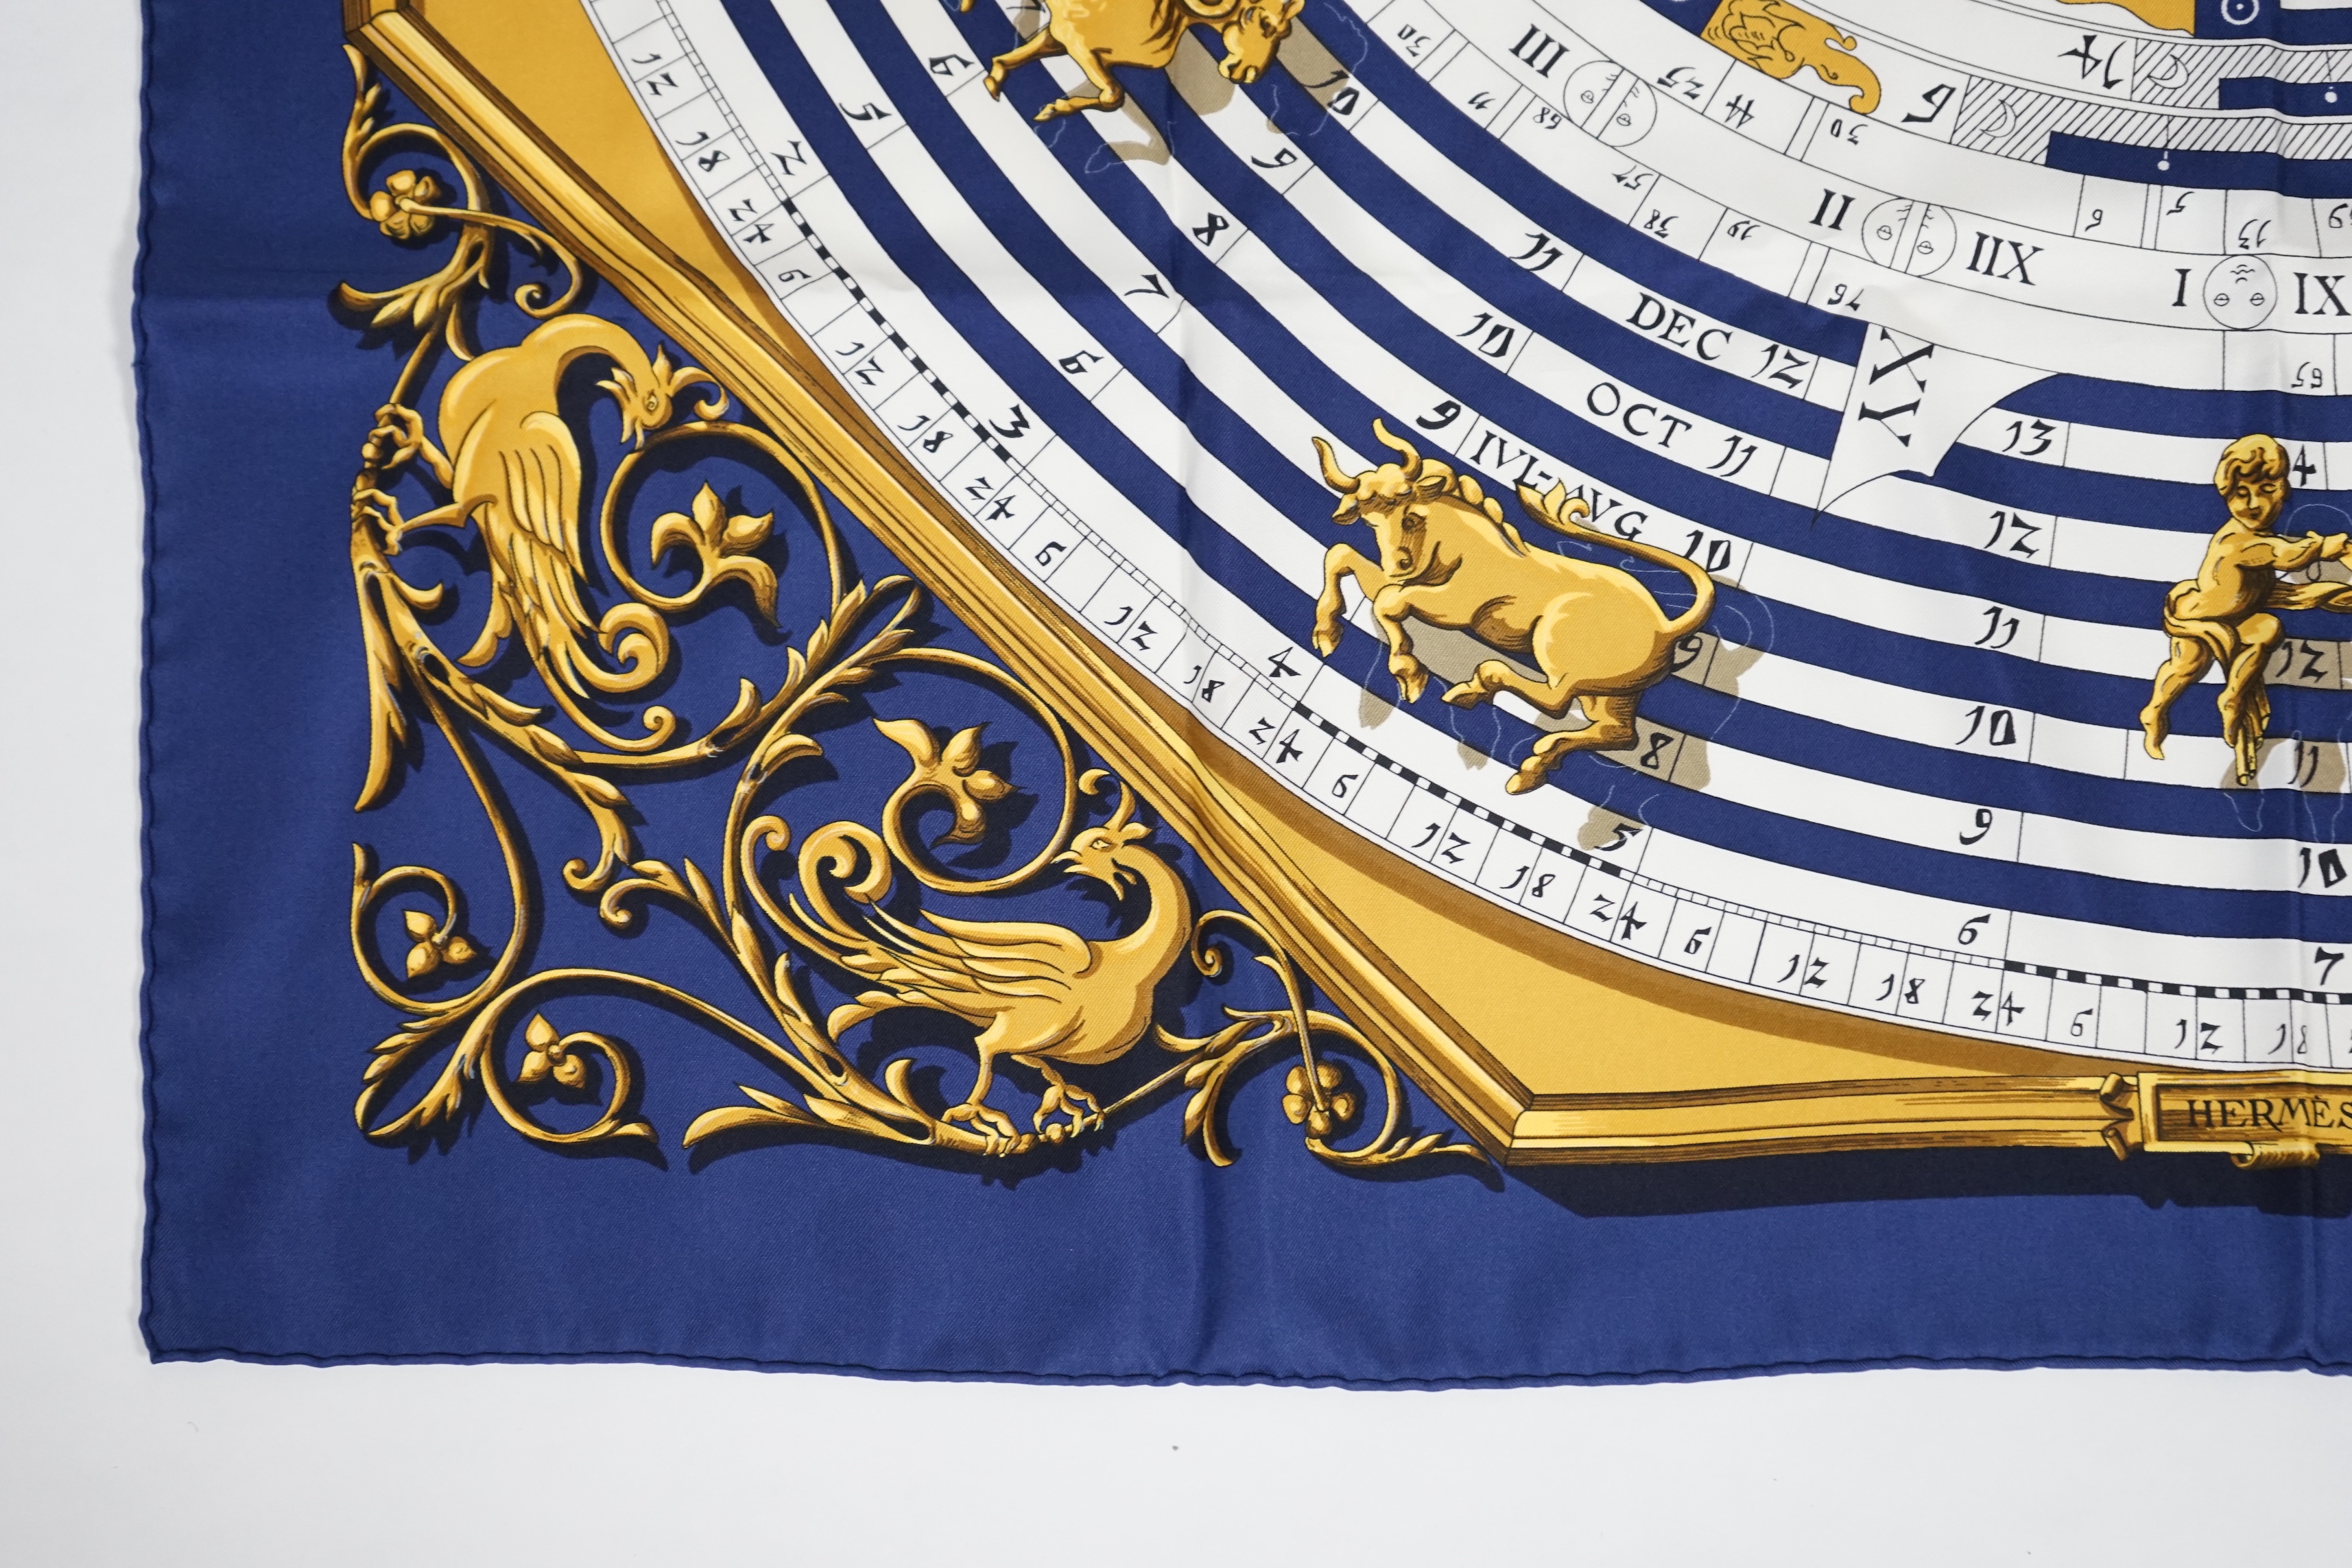 A Hermès Dies et Hore navy silk scarf, 90cm x 90cm